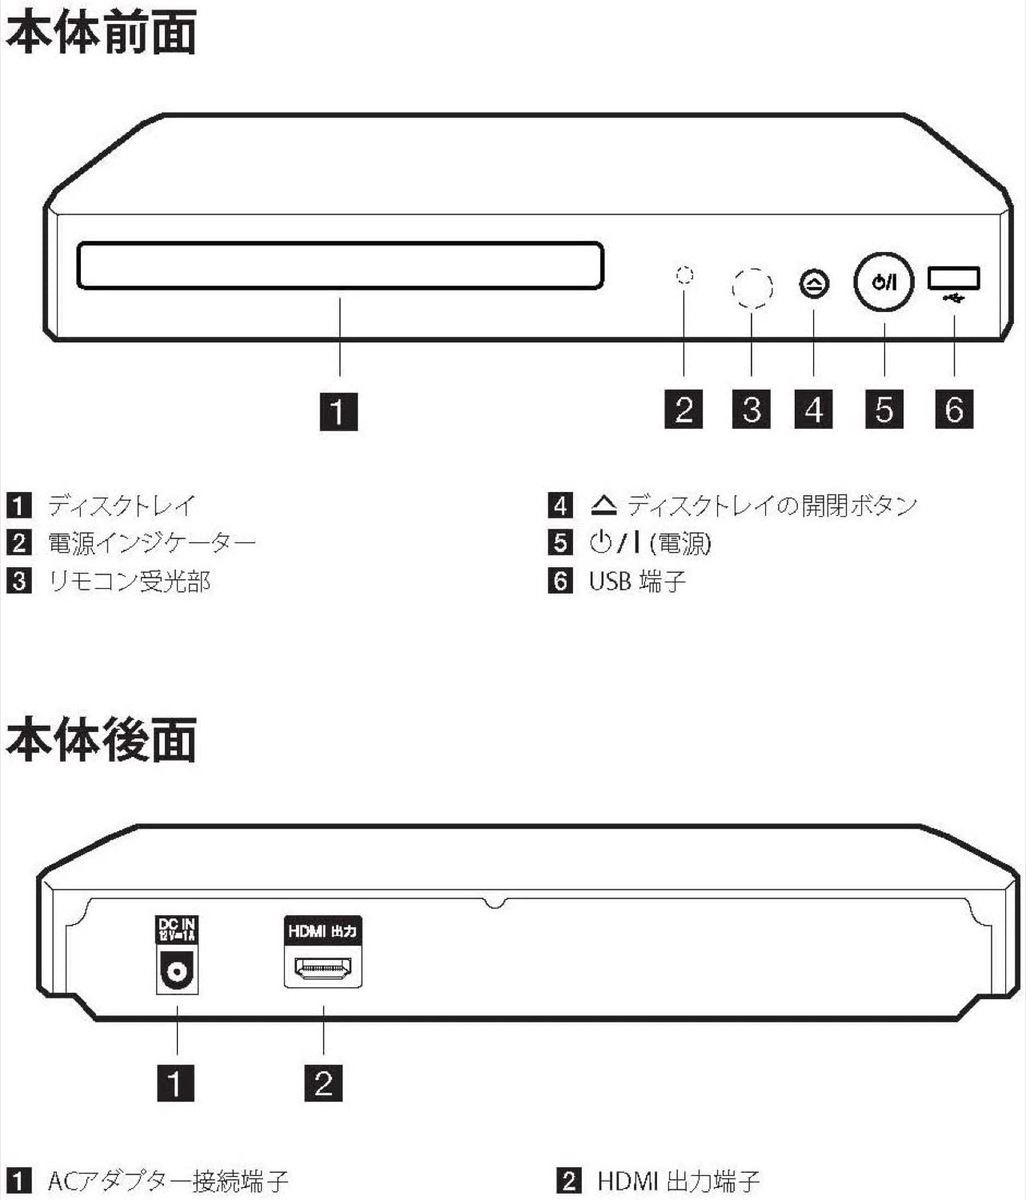 LG BP250 ブルーレイプレーヤー フルHD アップコンバート HDMIケーブル付属 SIMPLINK USB Dolby  Digital Audio DAC 横幅29cm x 奥行19.5cm コンパクト 小型 ブルーレイ Blu-ray Bluray BD-R DVD  LGエレクトロニクス エルジー (08) APマーケット